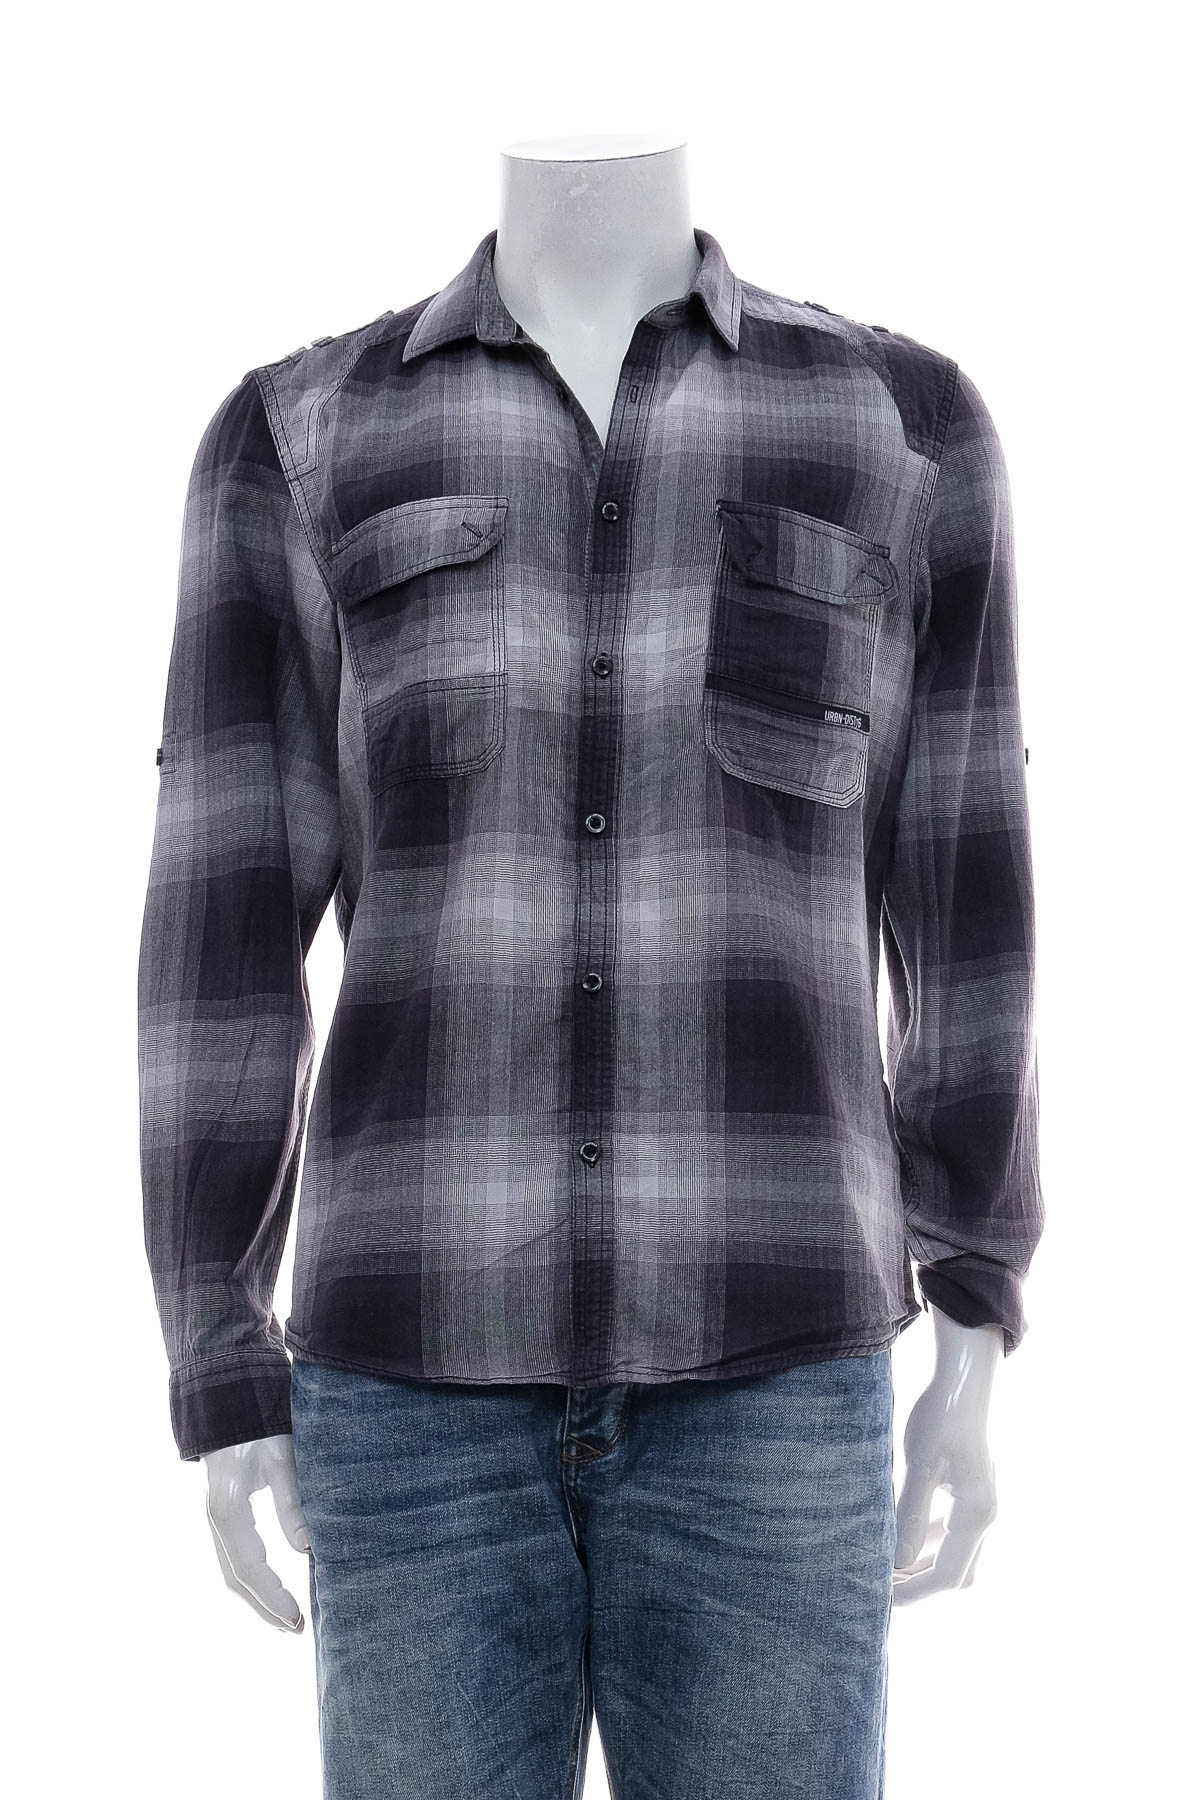 Men's shirt - Angelo Litrico - 0